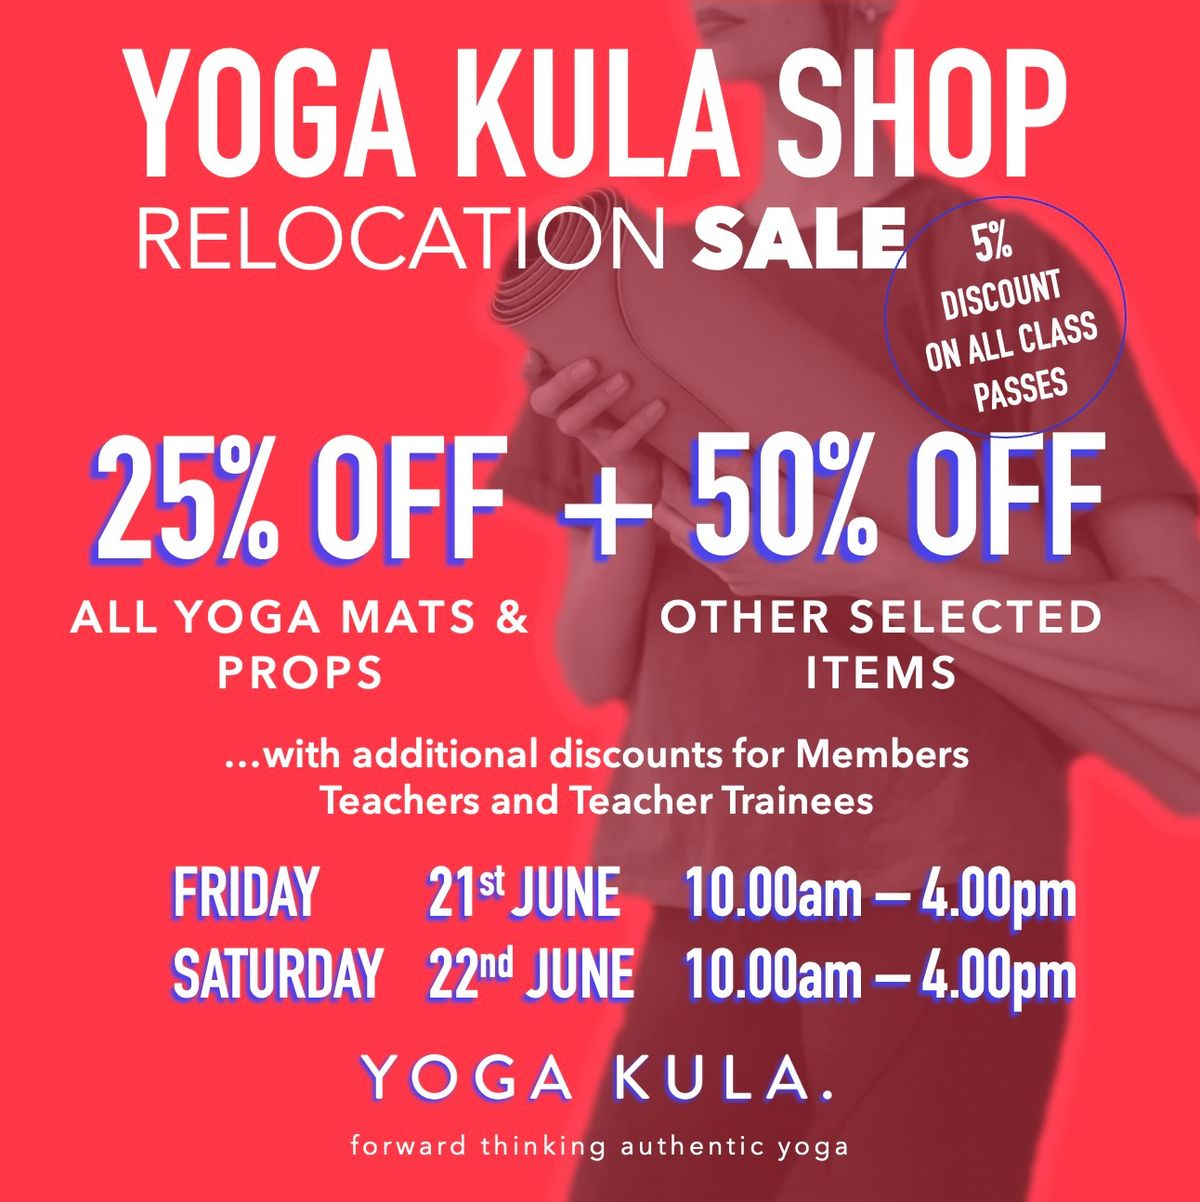 Yoga Kula Shop - Relocation Sale 